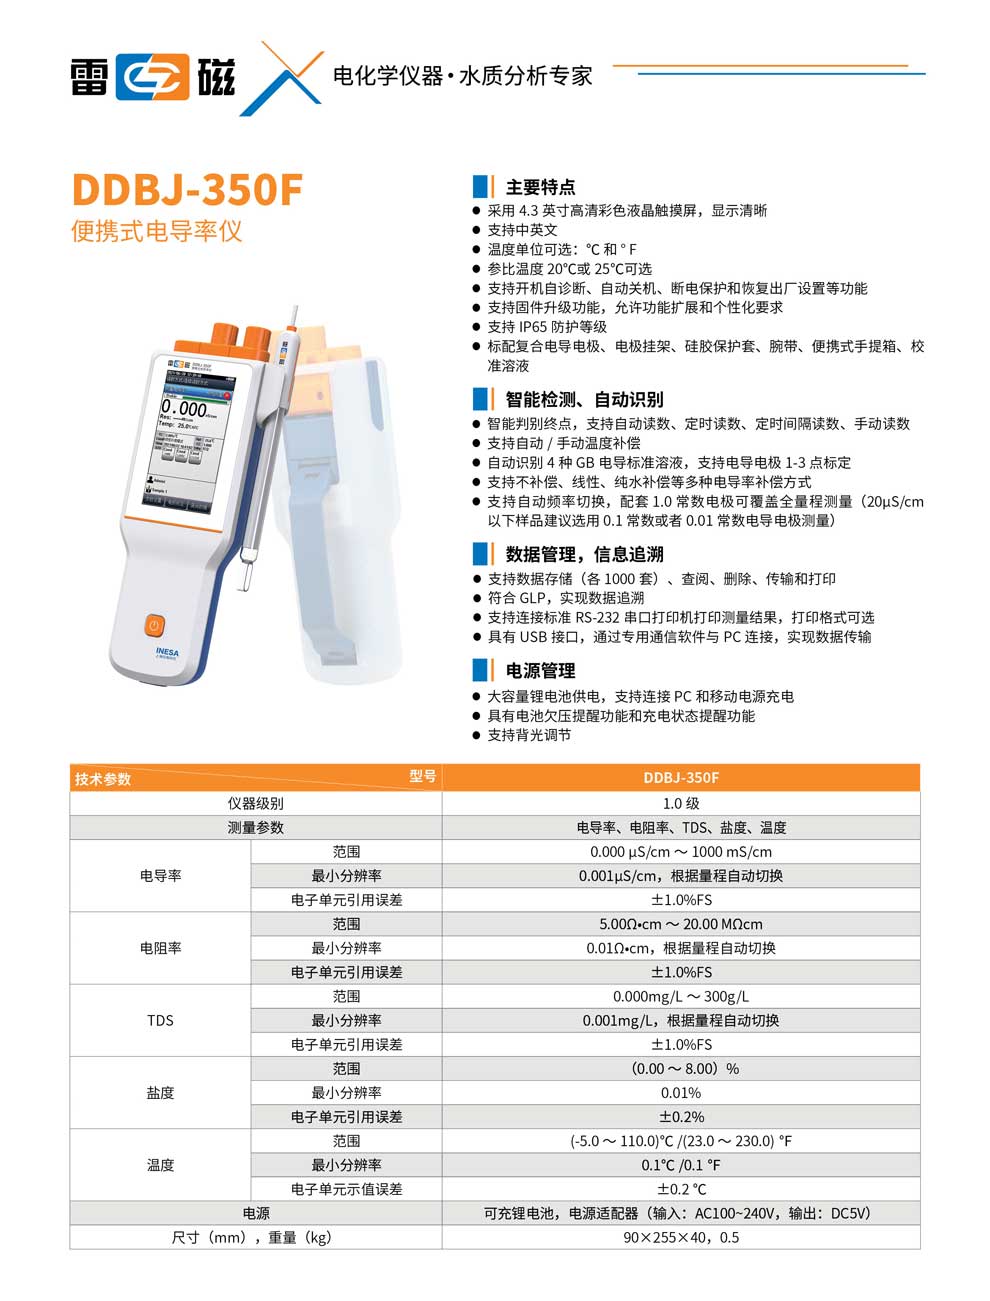 DDBJ-350F-彩页.jpg